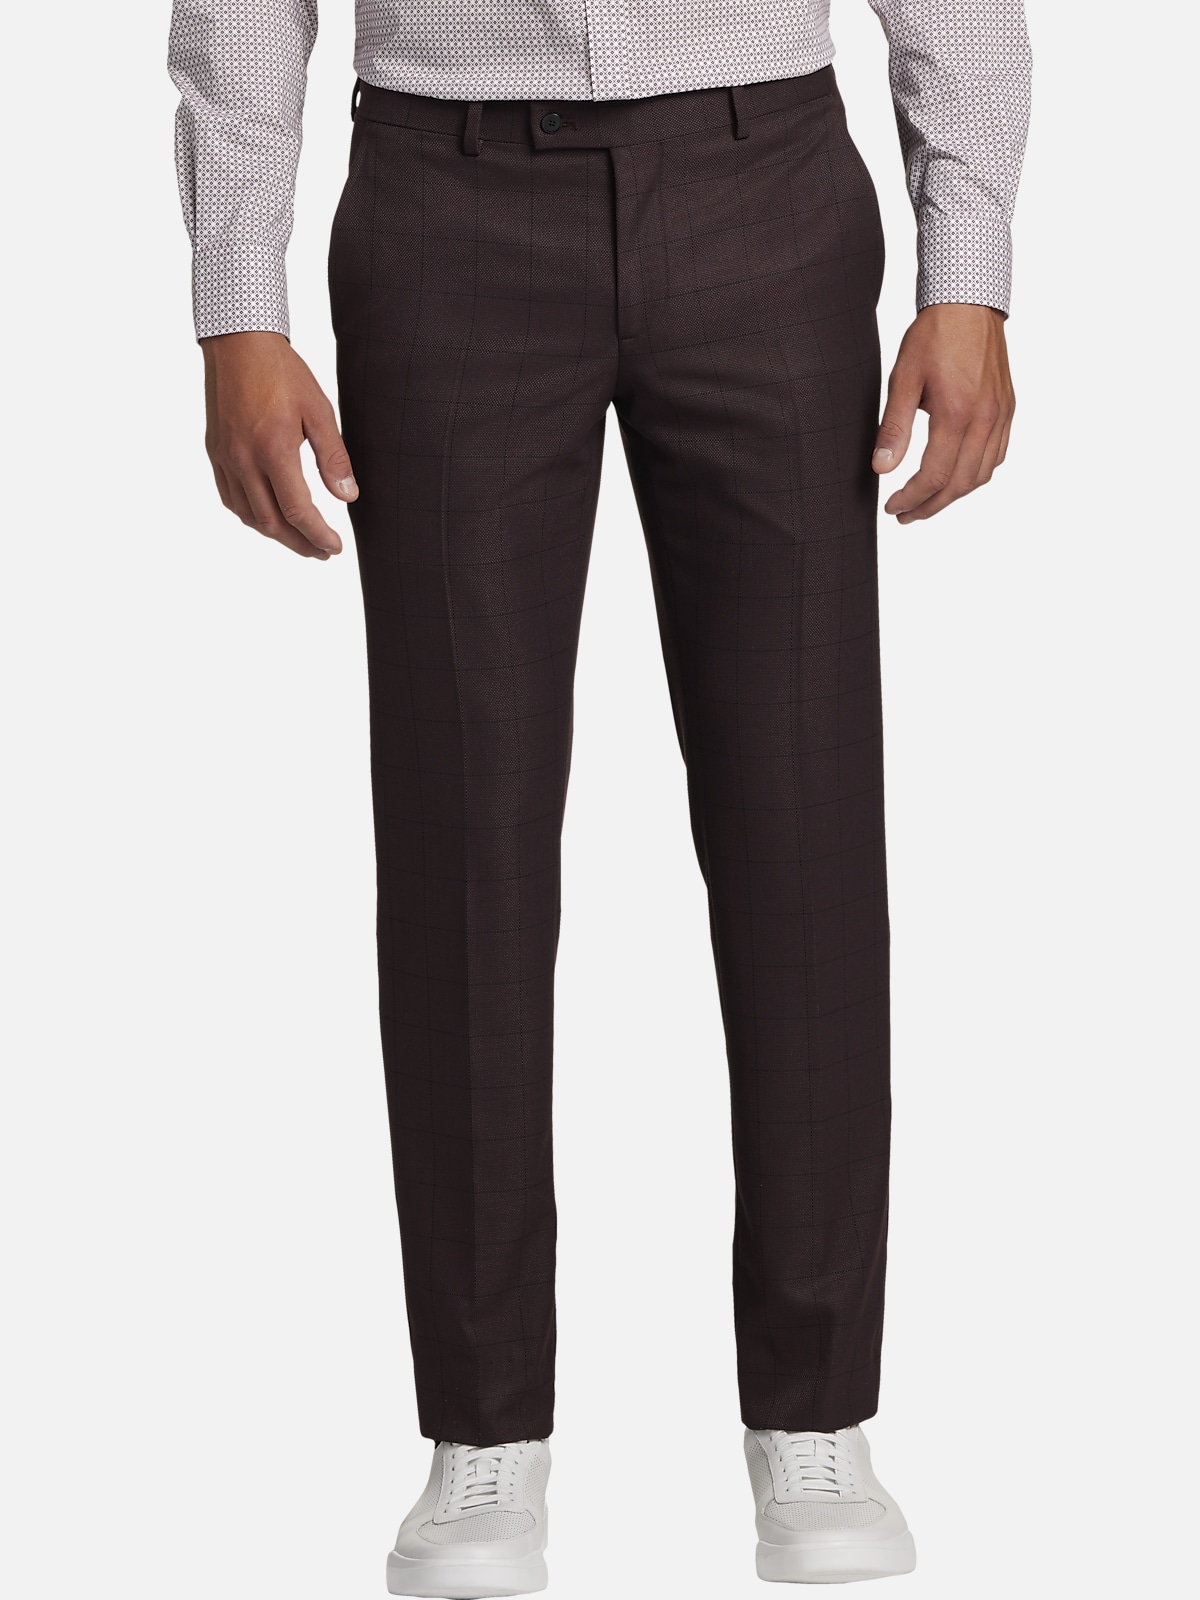 Egara Slim Fit Suit Separates Pants | All Sale| Men's Wearhouse